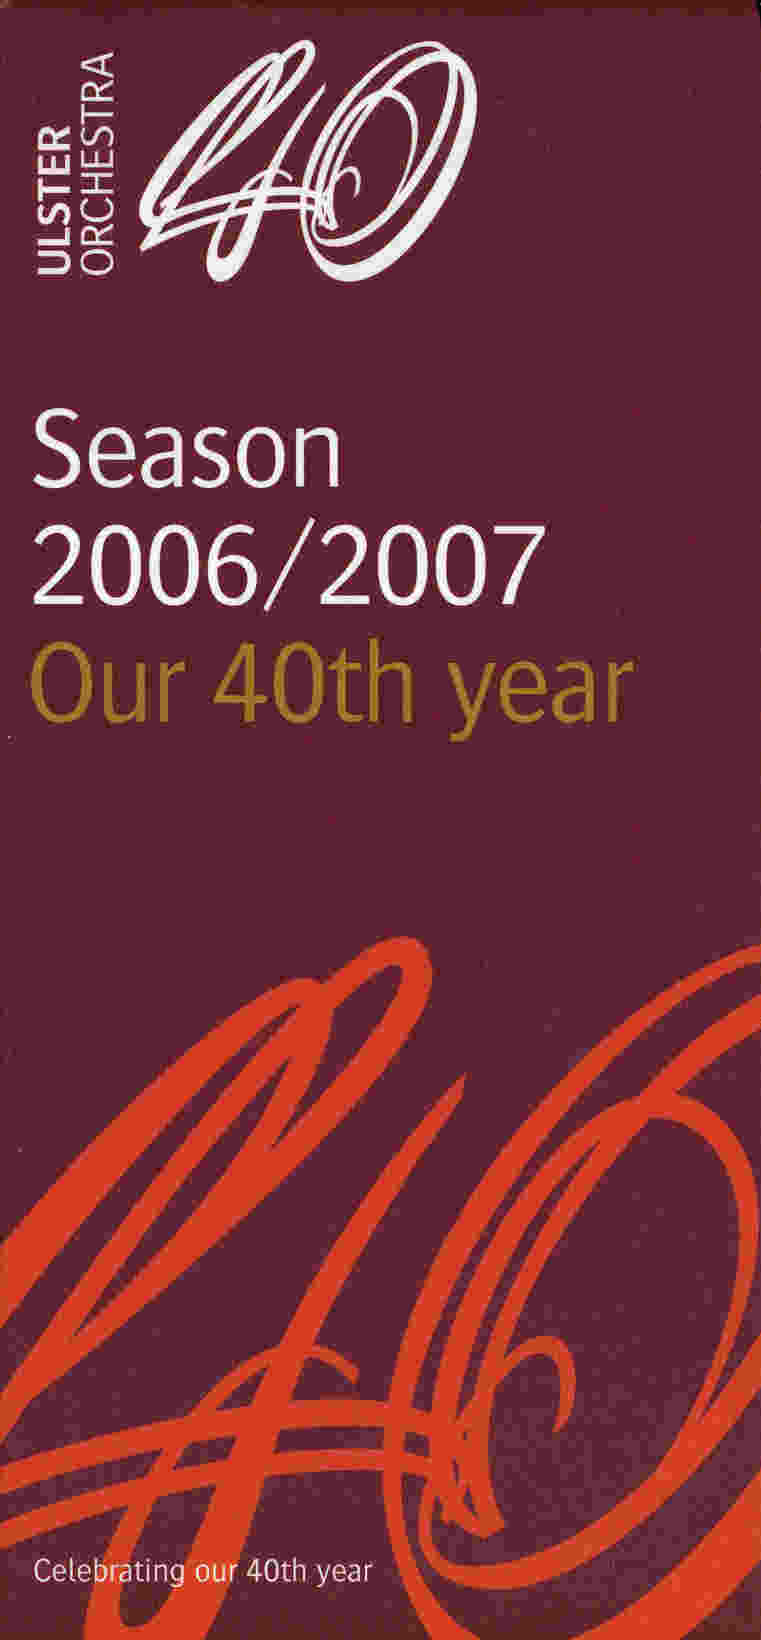 Ulster Orchestra season cover 2006-2007